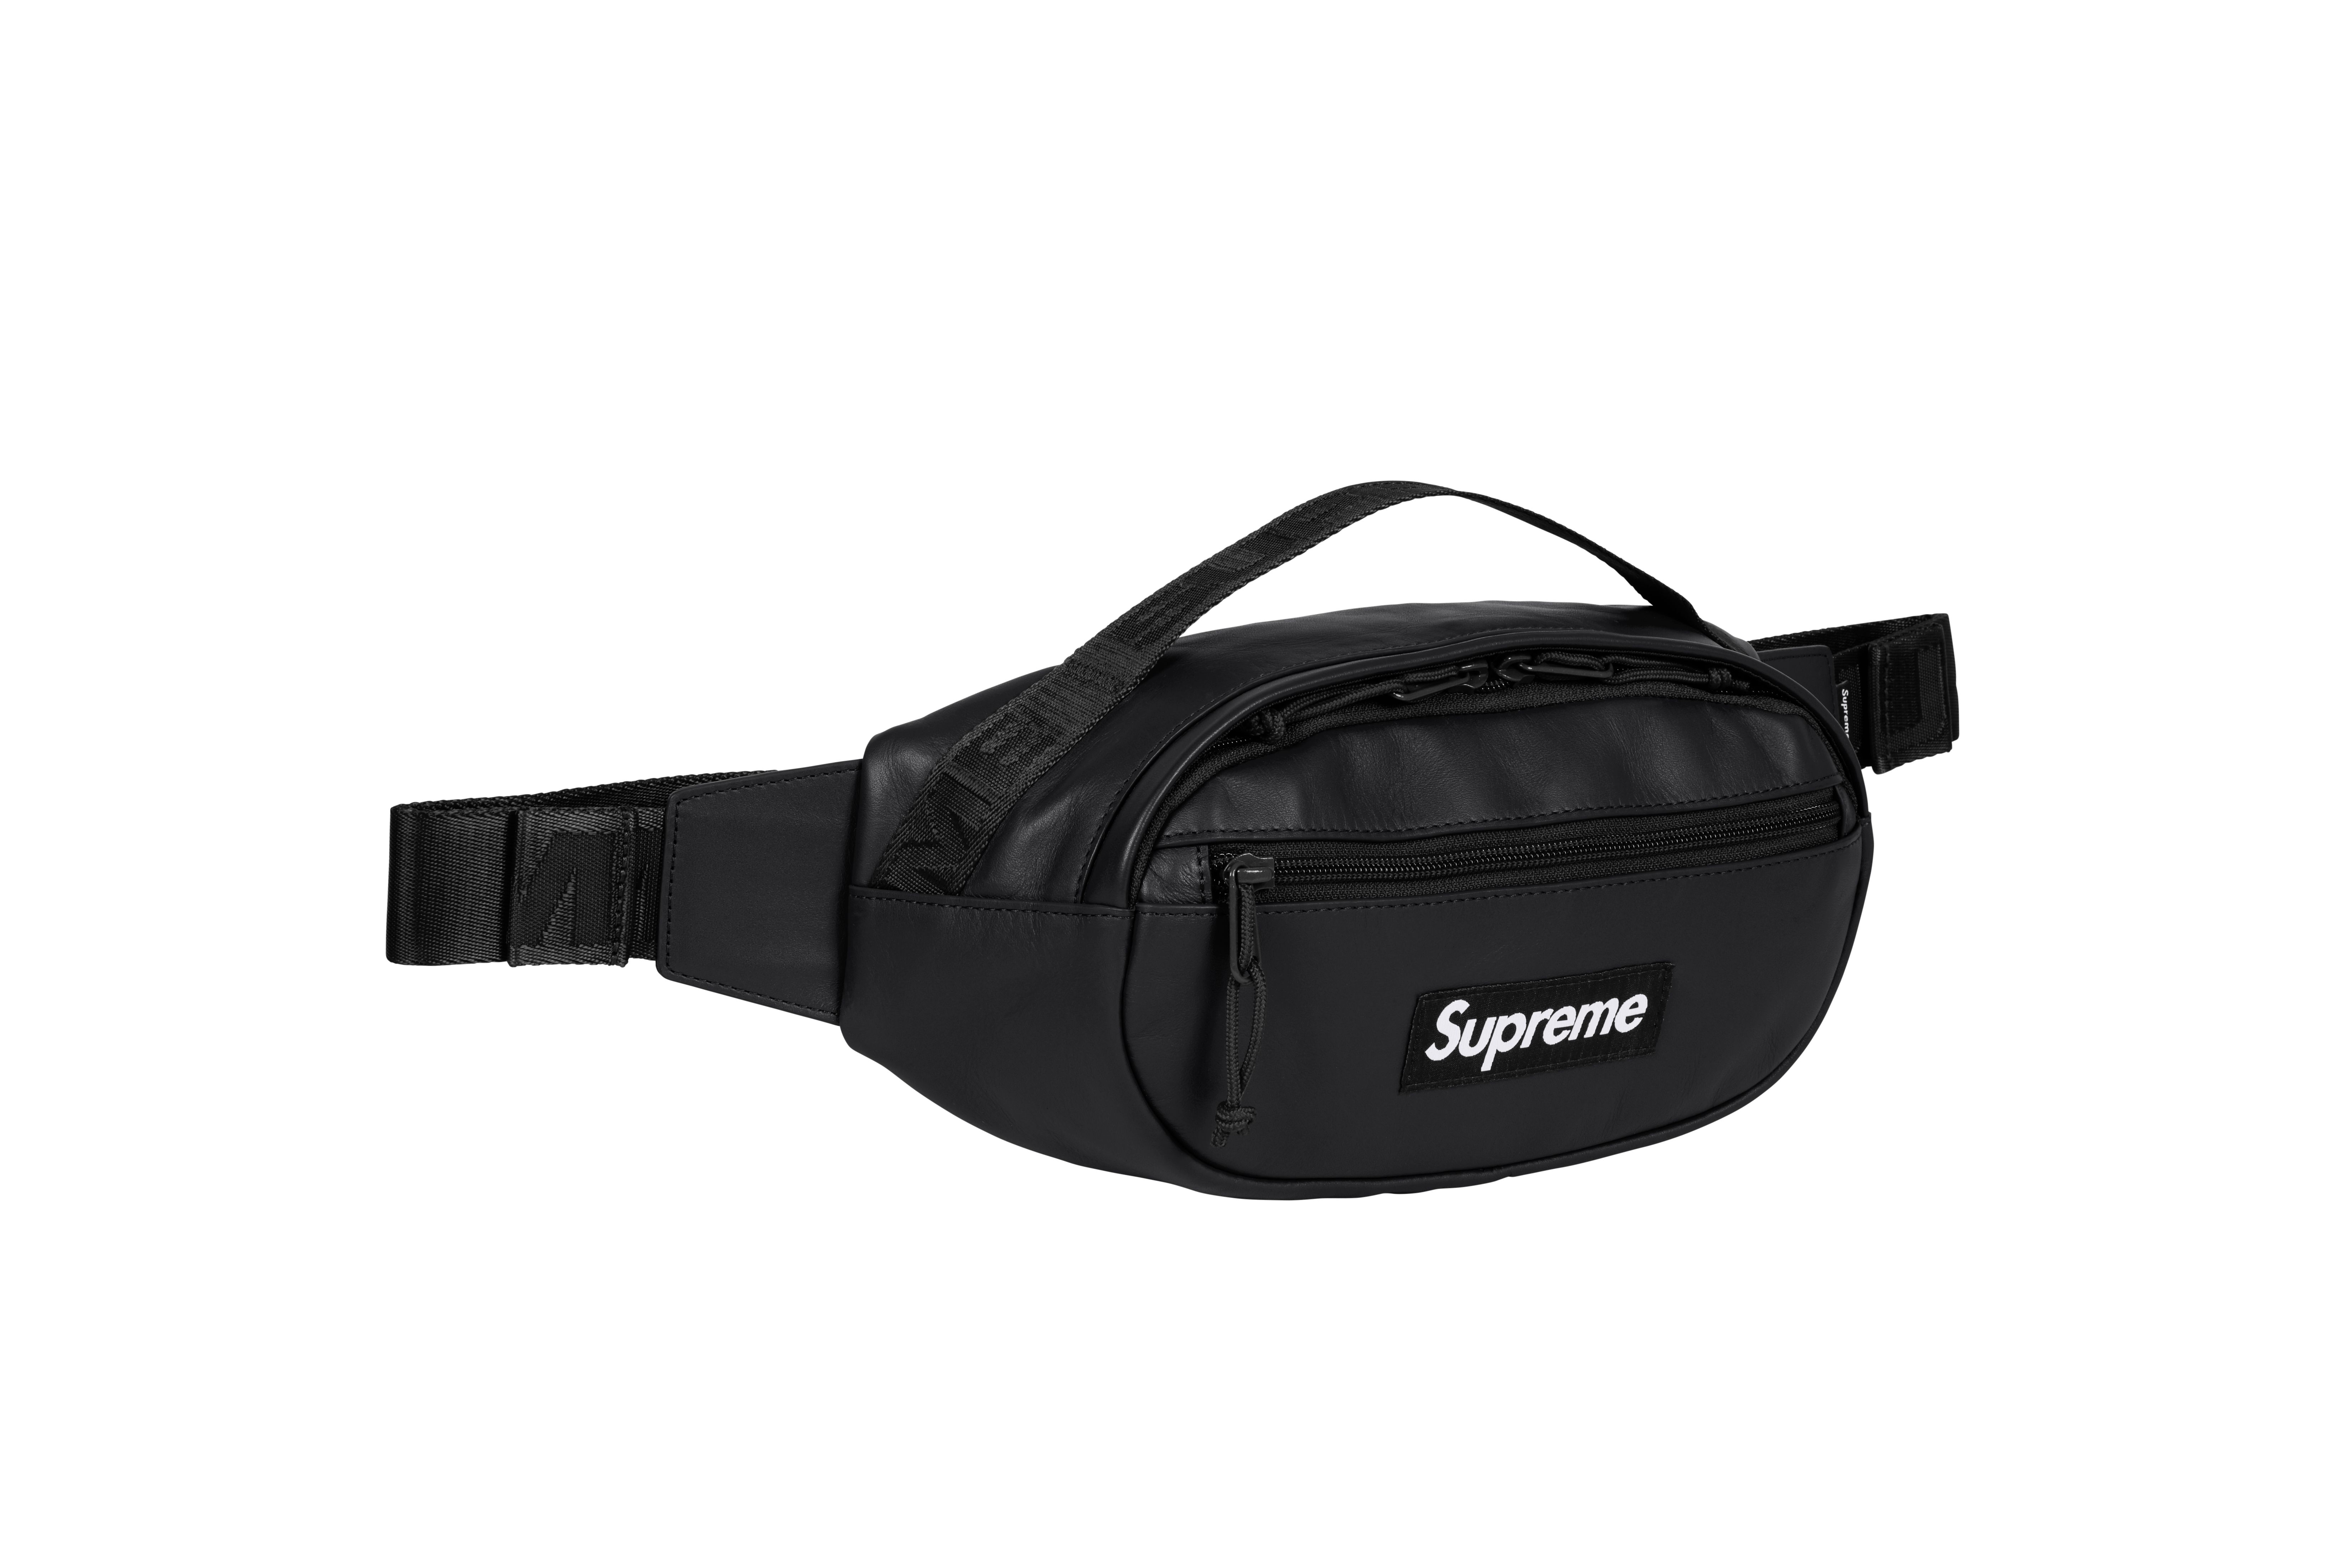 Supreme String Waist Bag Black - SS21 - US